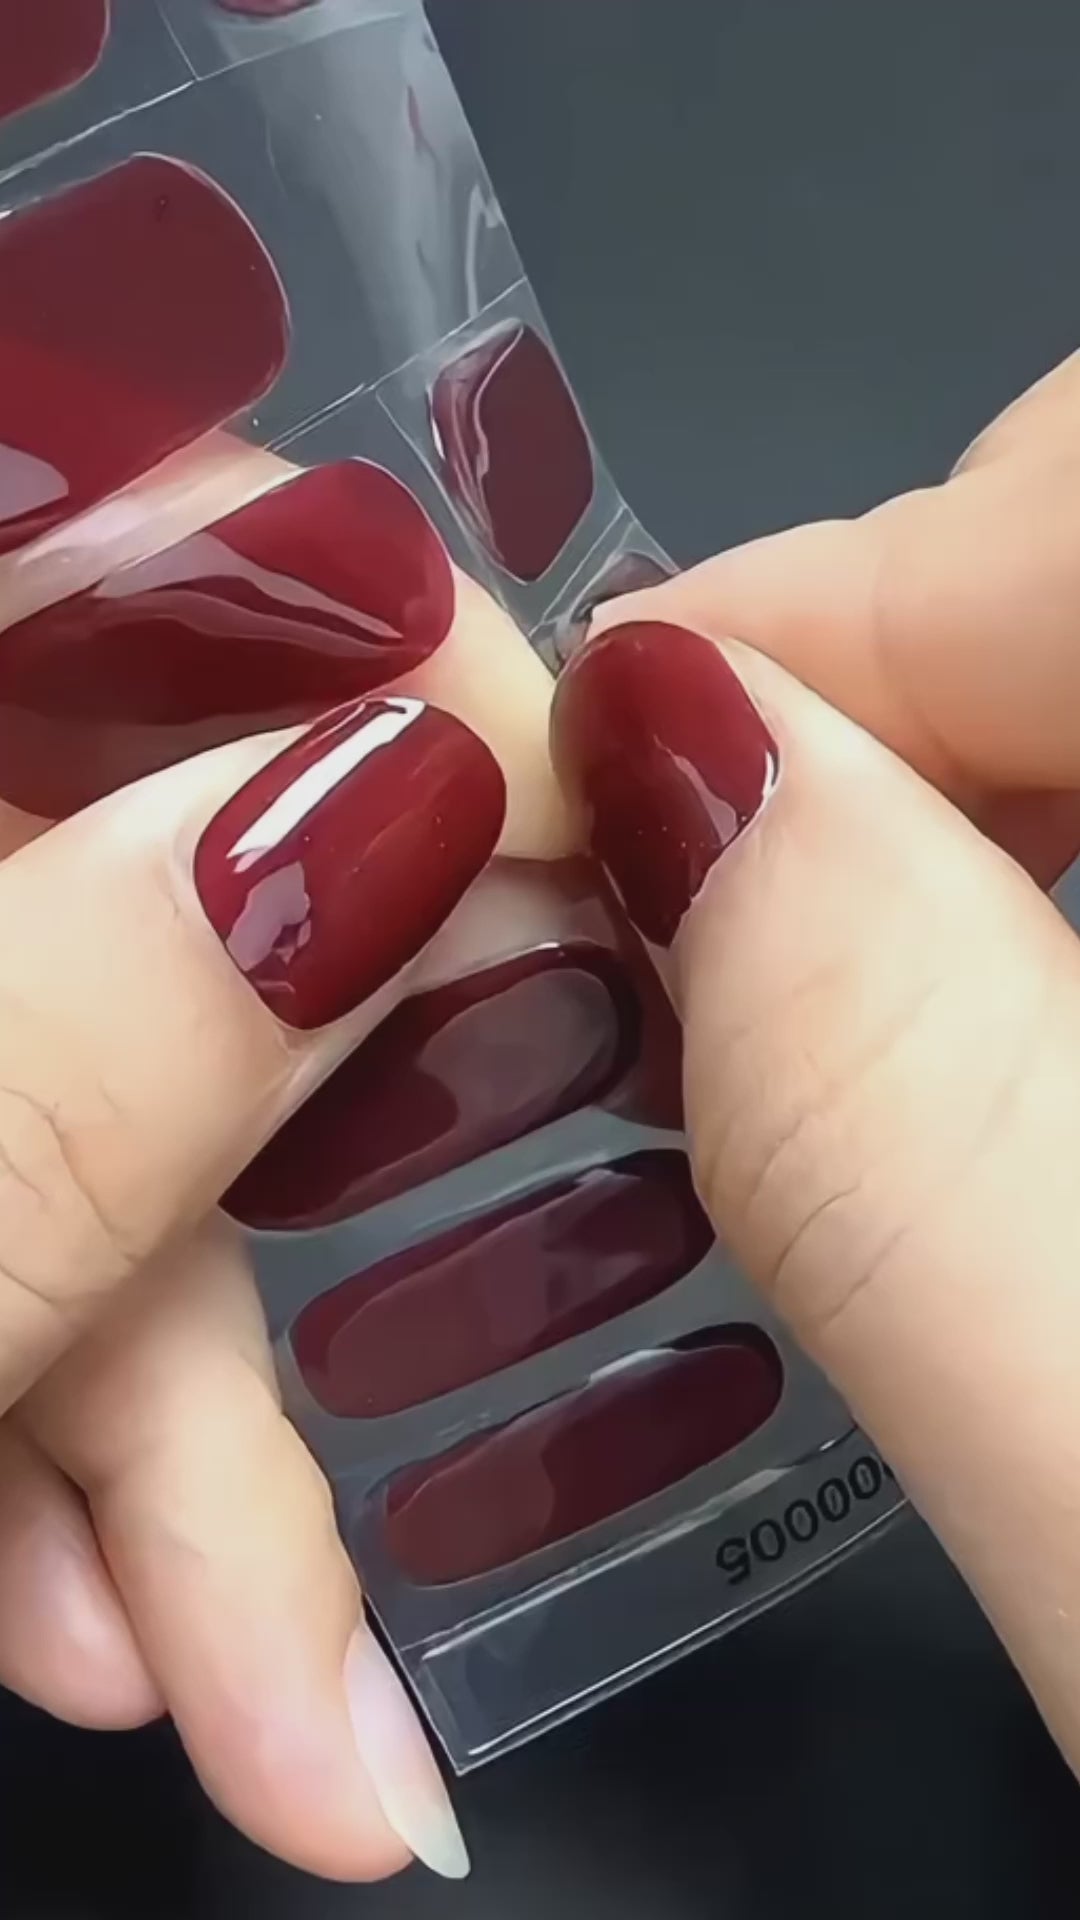 14 nail set with pattern